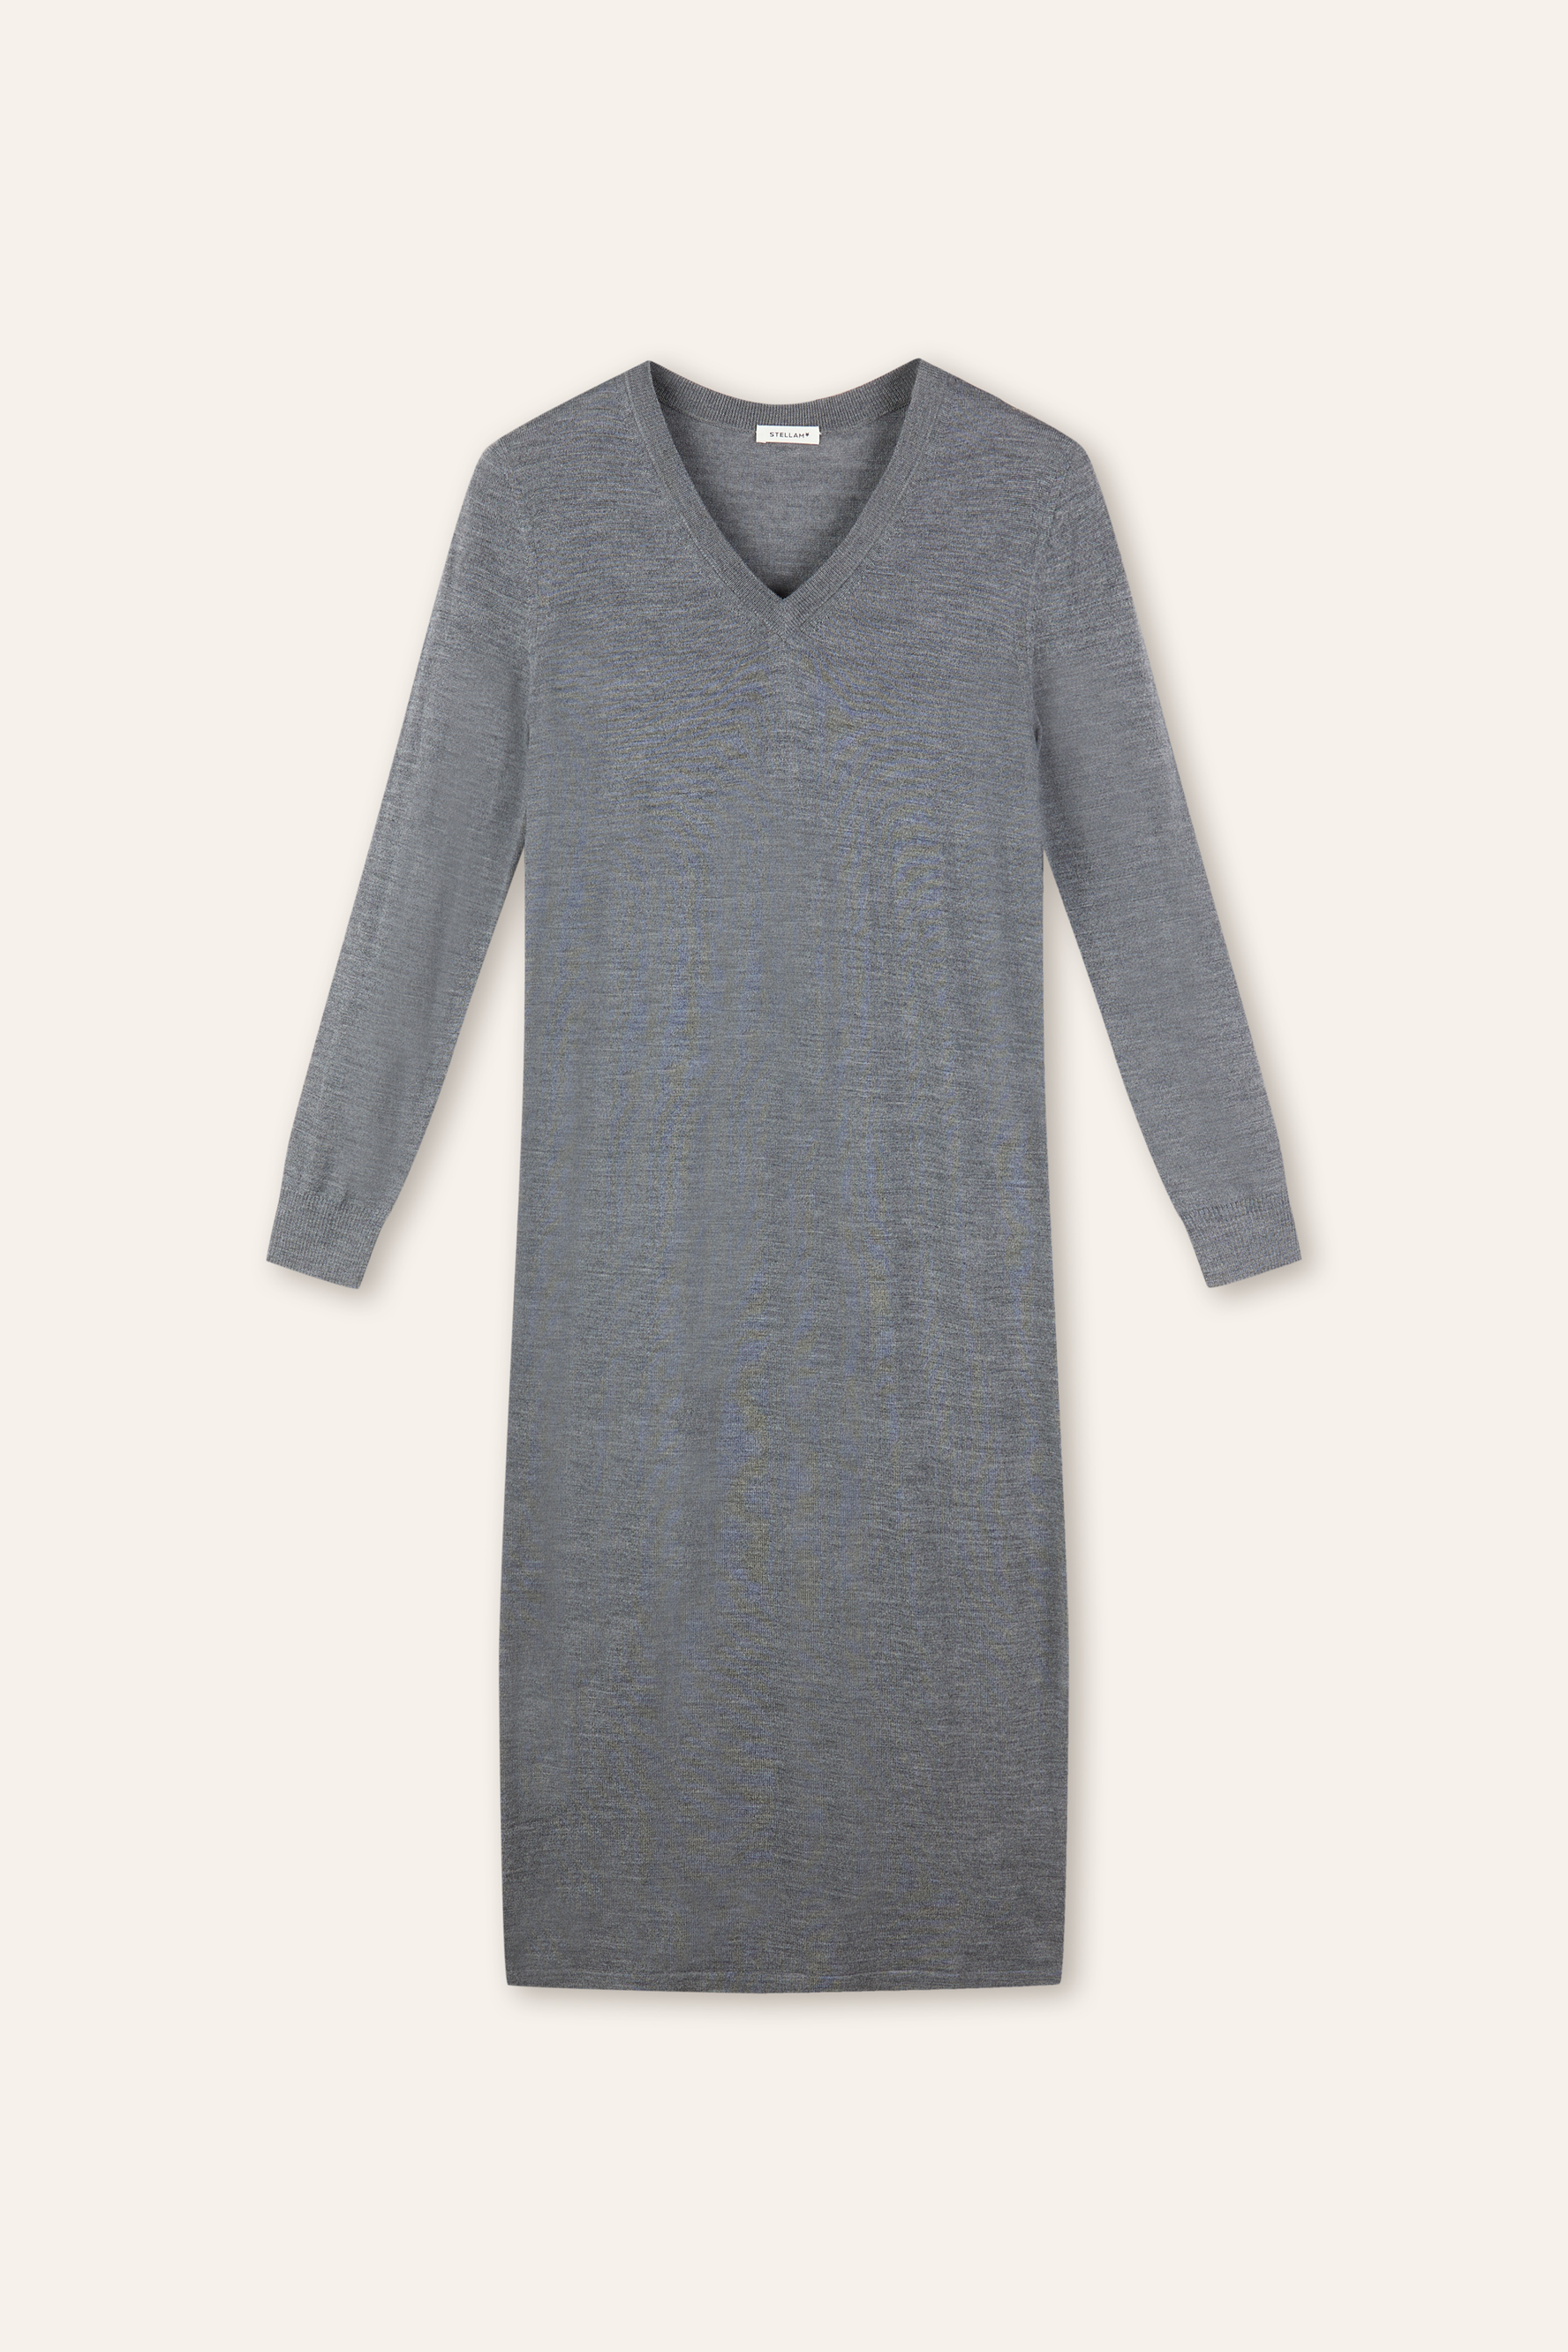 REGAL long knit-dress (Dark grey)